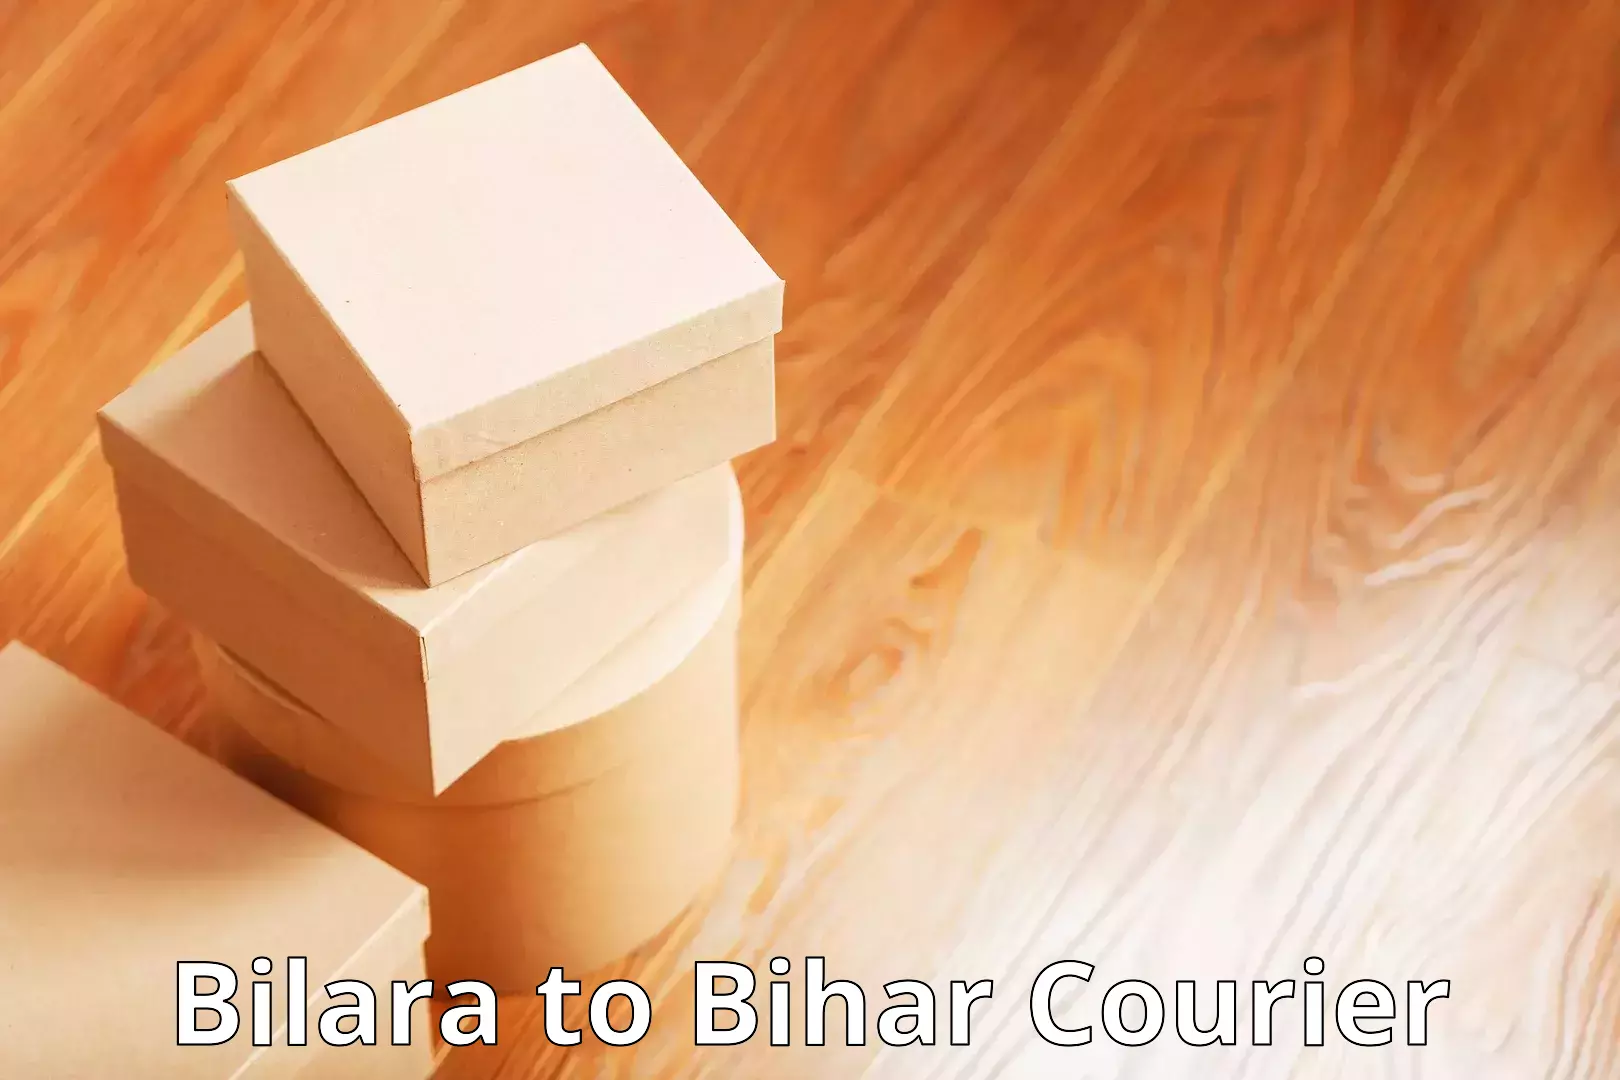 Express delivery network in Bilara to Bihar